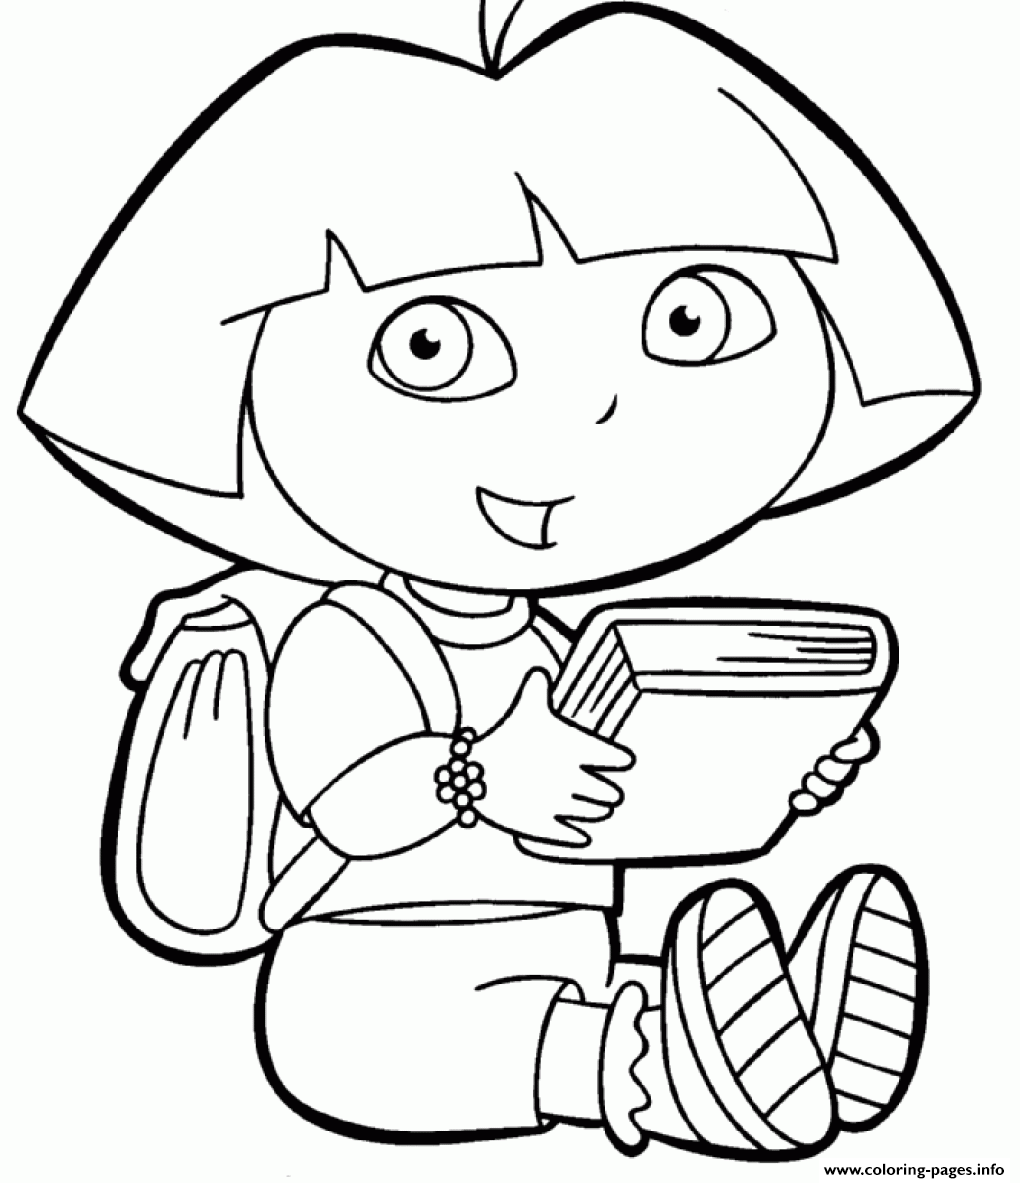 Dora The Explorer S And A Bookbb06 coloring